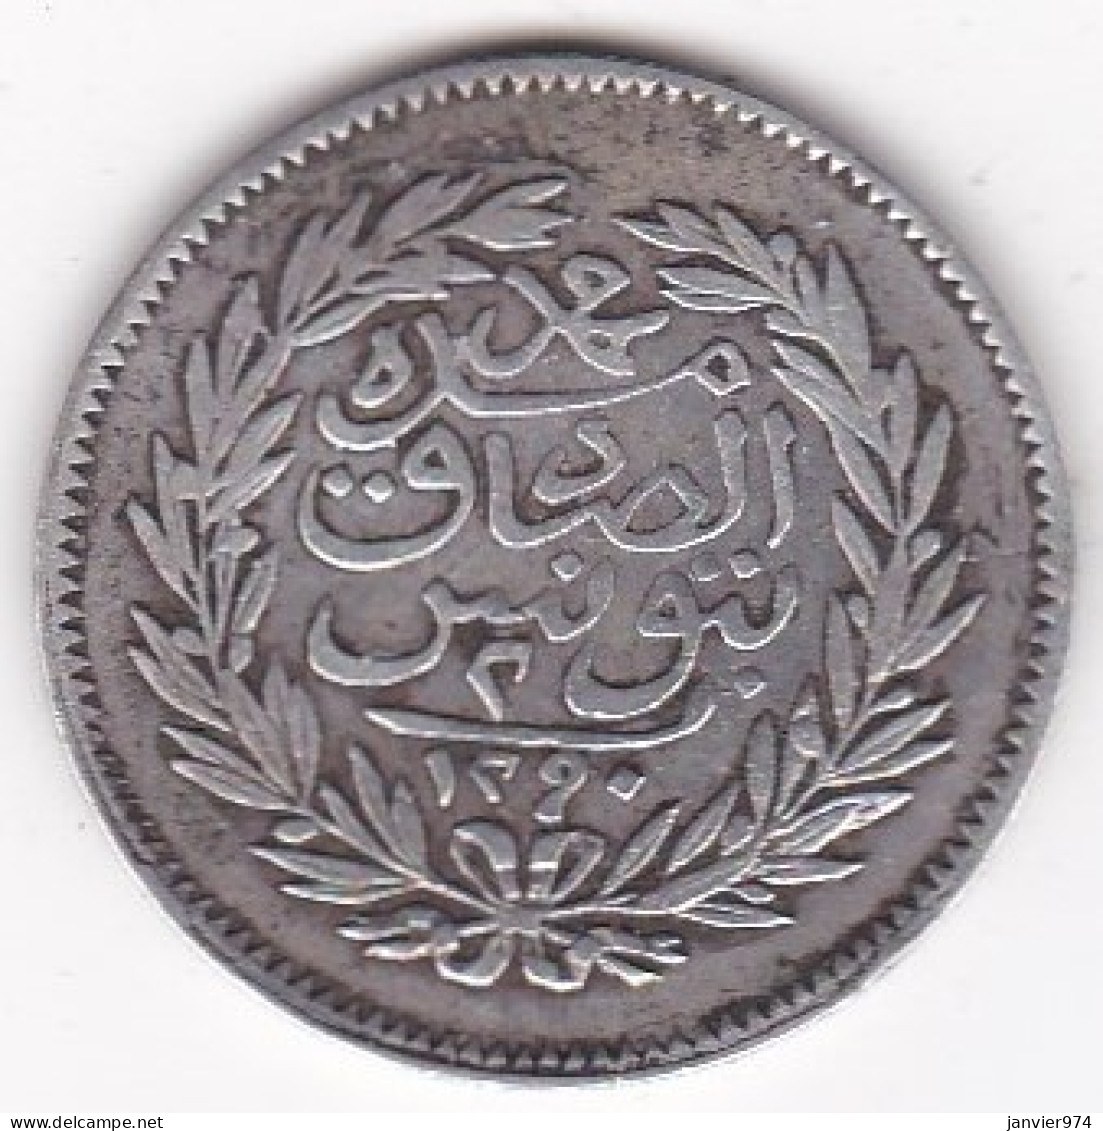 Tunisie Tunis 2 Piastres / Rials AH 1290 - 1873, Sultan Abdul Aziz, En Argent, KM # 147a - Tunisie